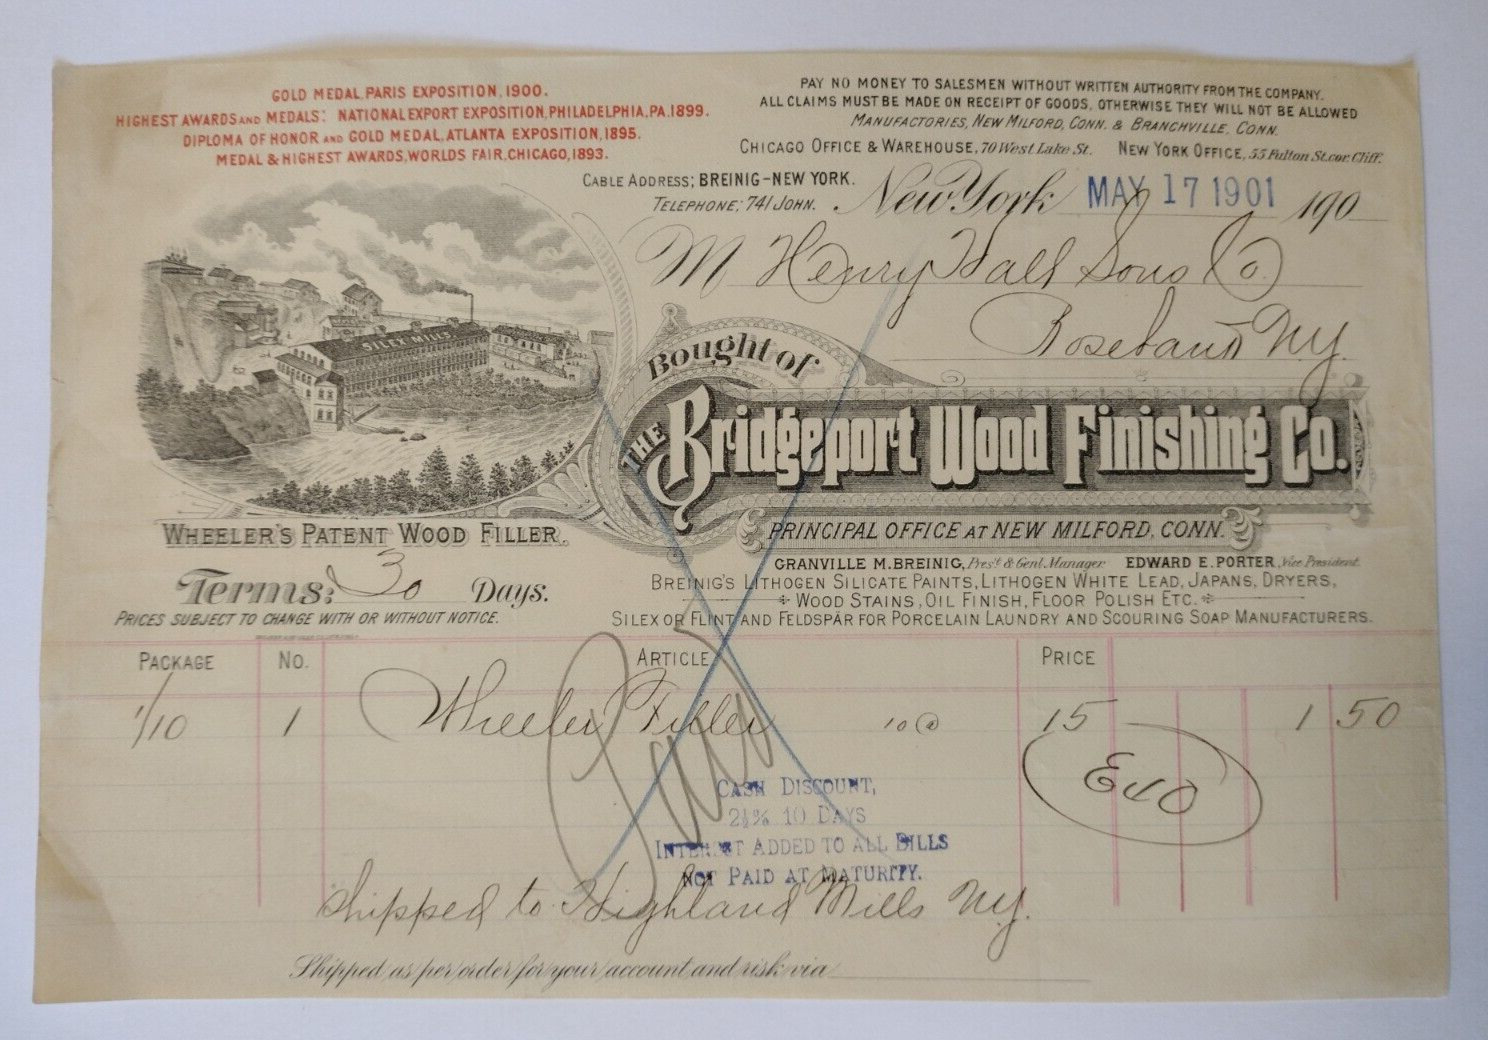 1901 Bridgeport Wood Finishing Co. Invoice Bill Receipt New Milford, Connecticut